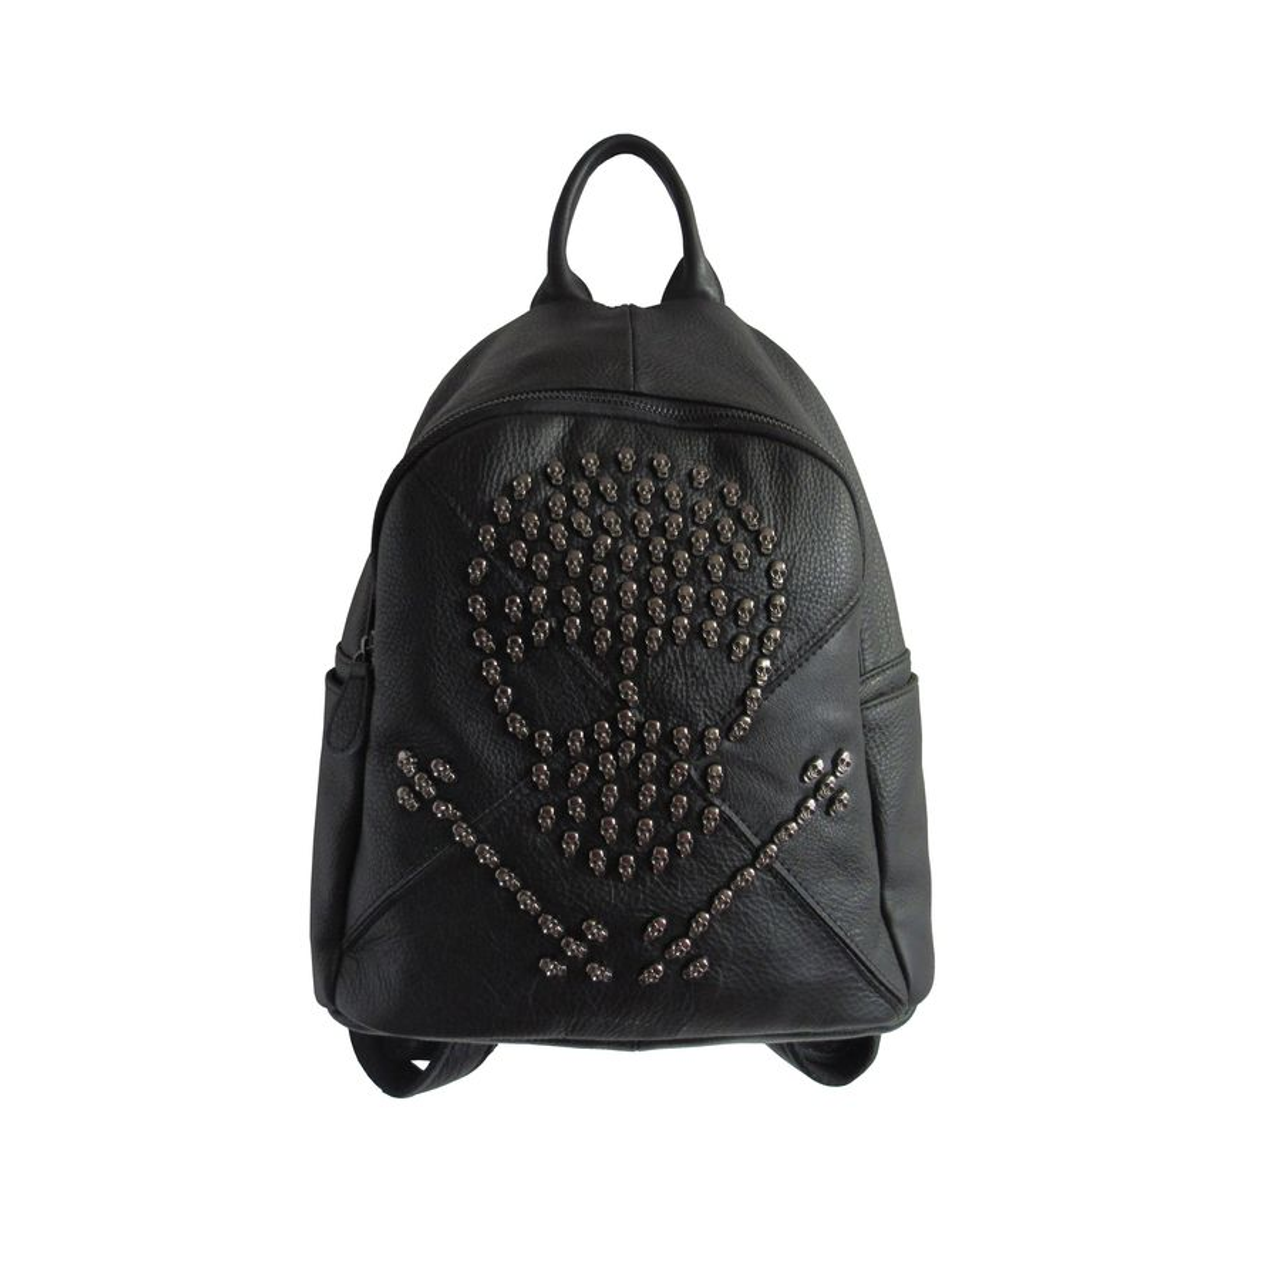 Amerileather® Joreah Black Leather Backpack, #1941-0 product image